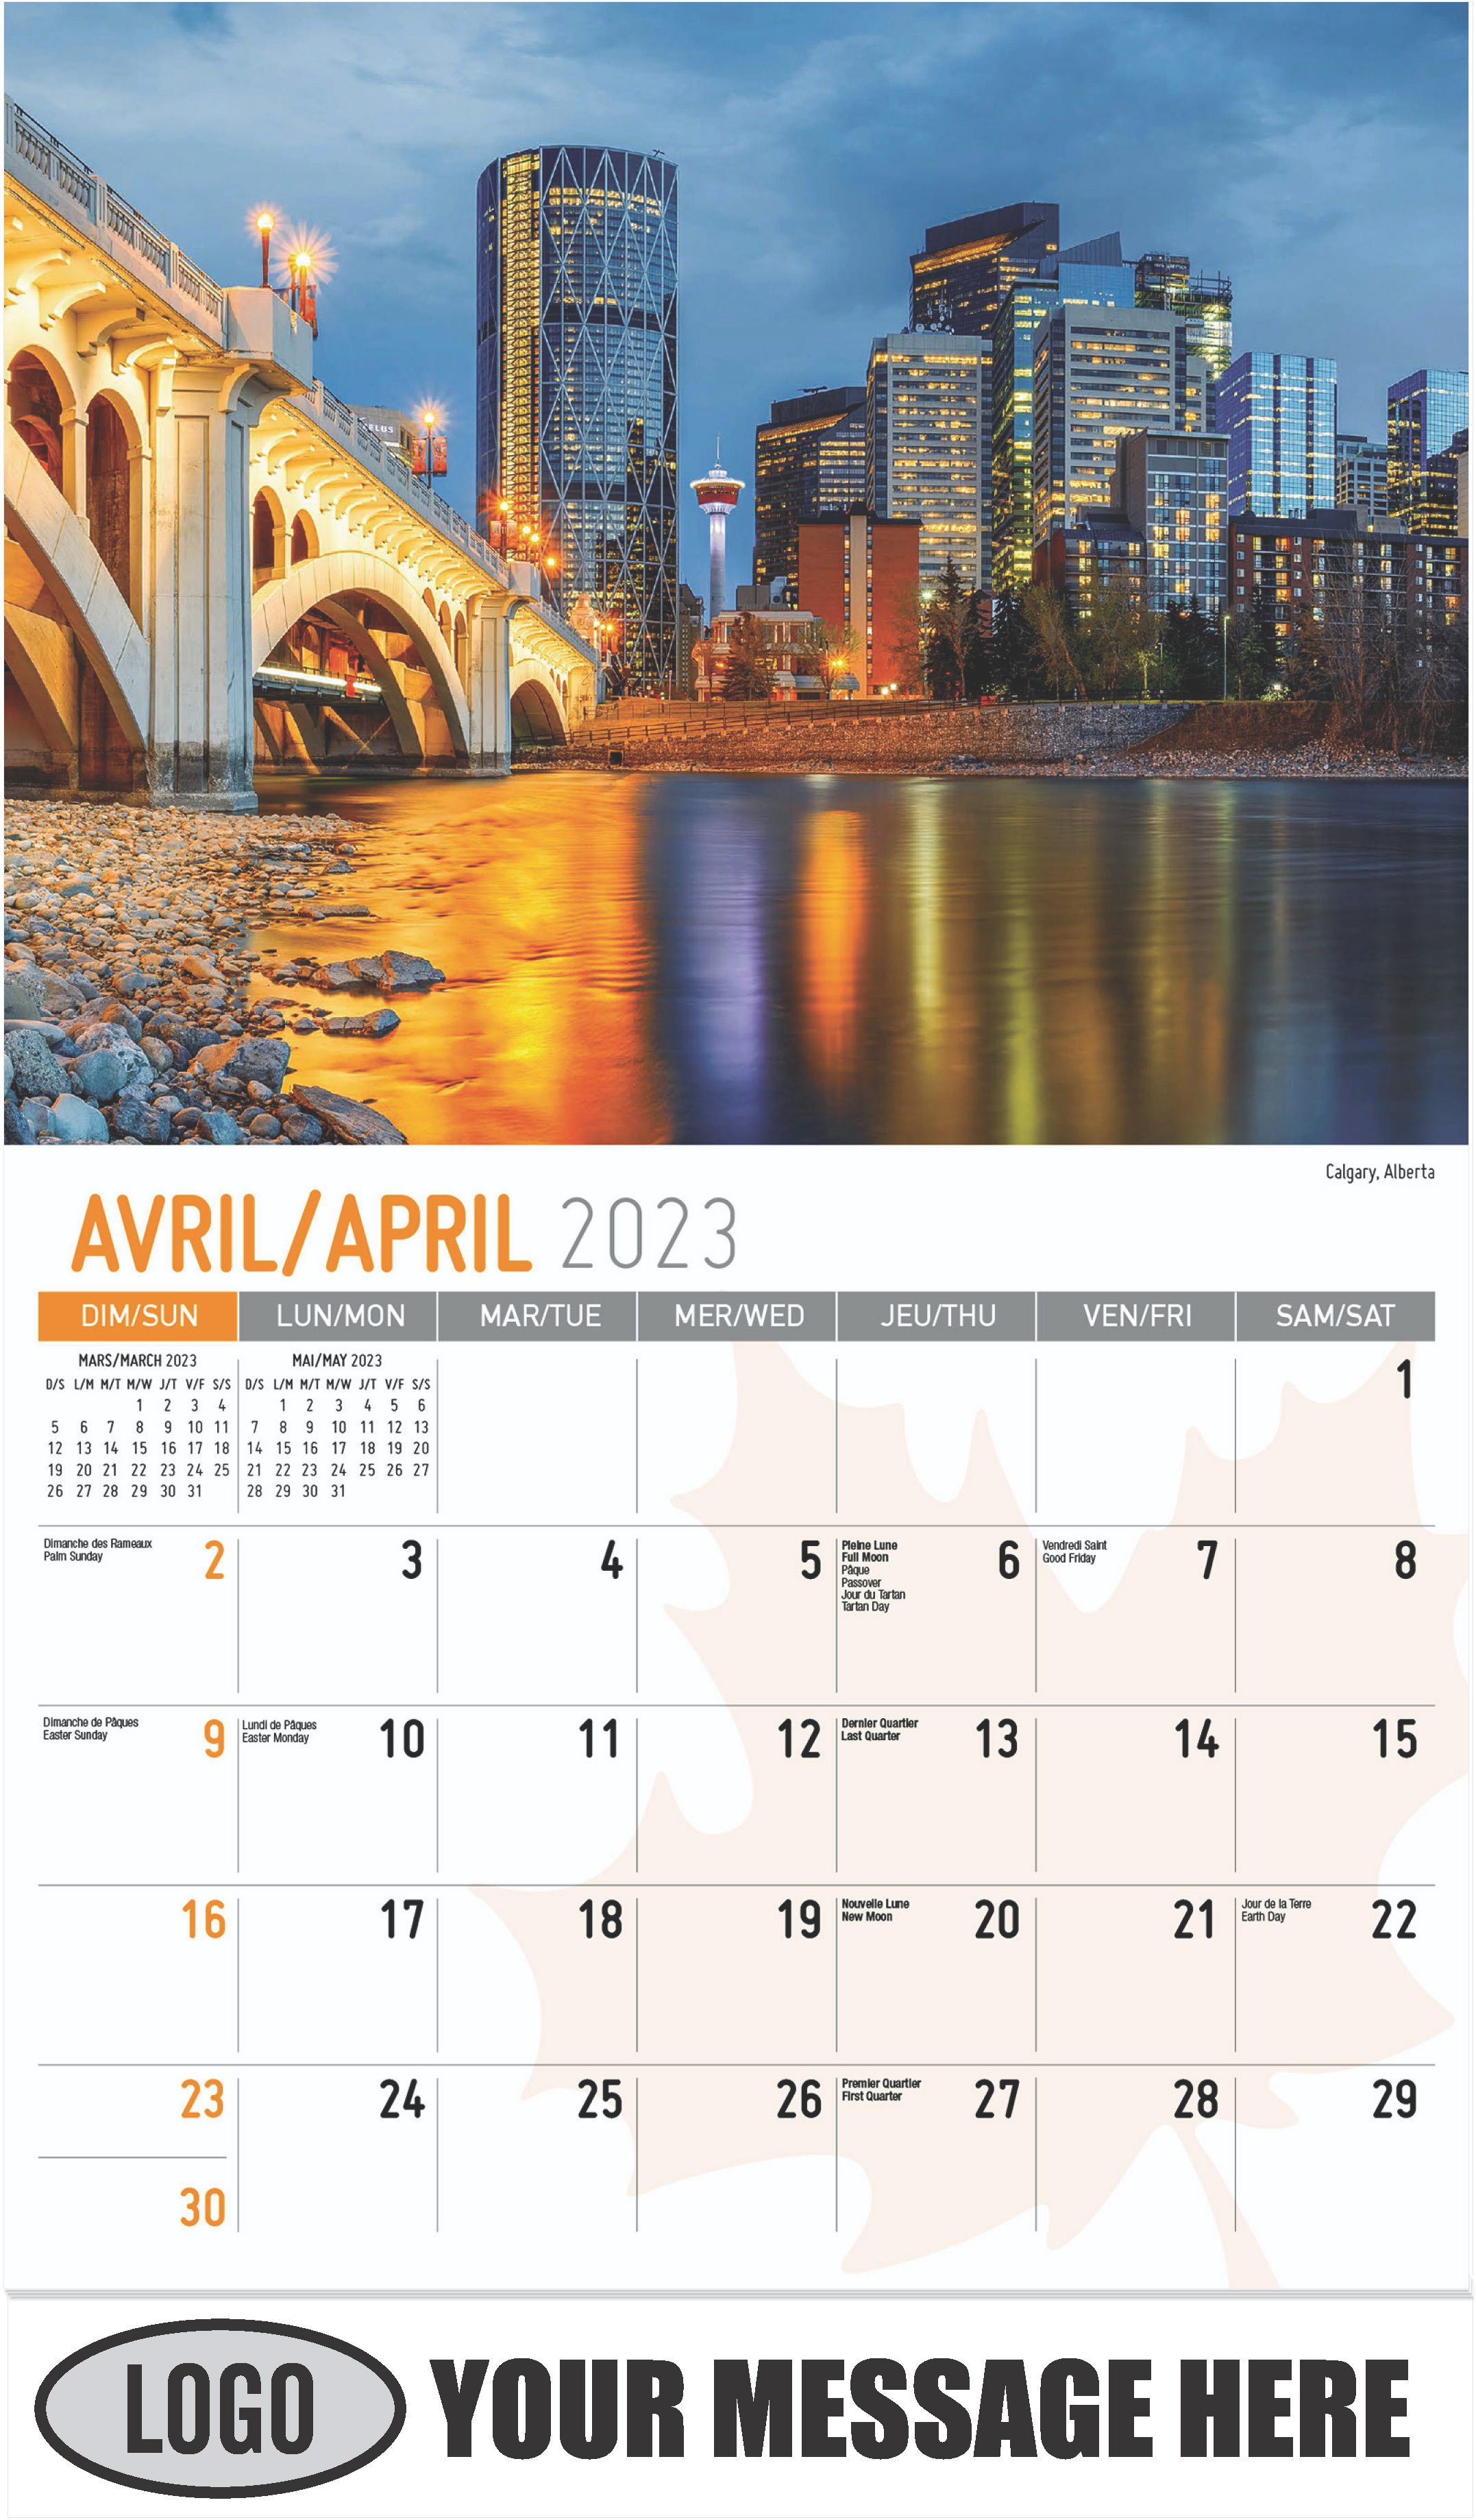 Calgary, Alberta - April - Scenes of Canada(French-English bilingual) 2023 Promotional Calendar